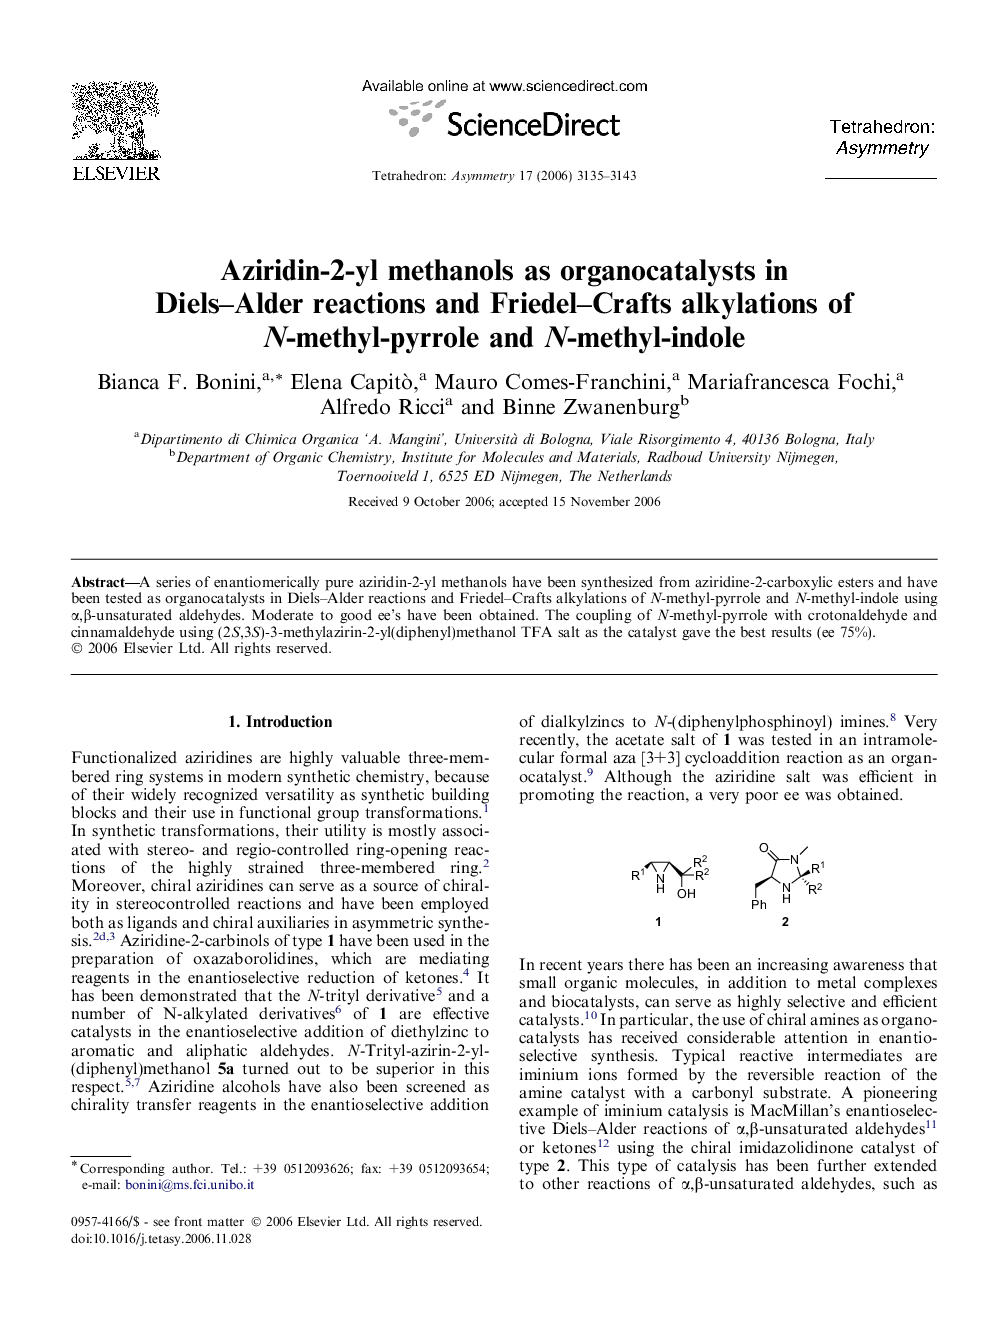 Aziridin-2-yl methanols as organocatalysts in Diels–Alder reactions and Friedel–Crafts alkylations of N-methyl-pyrrole and N-methyl-indole